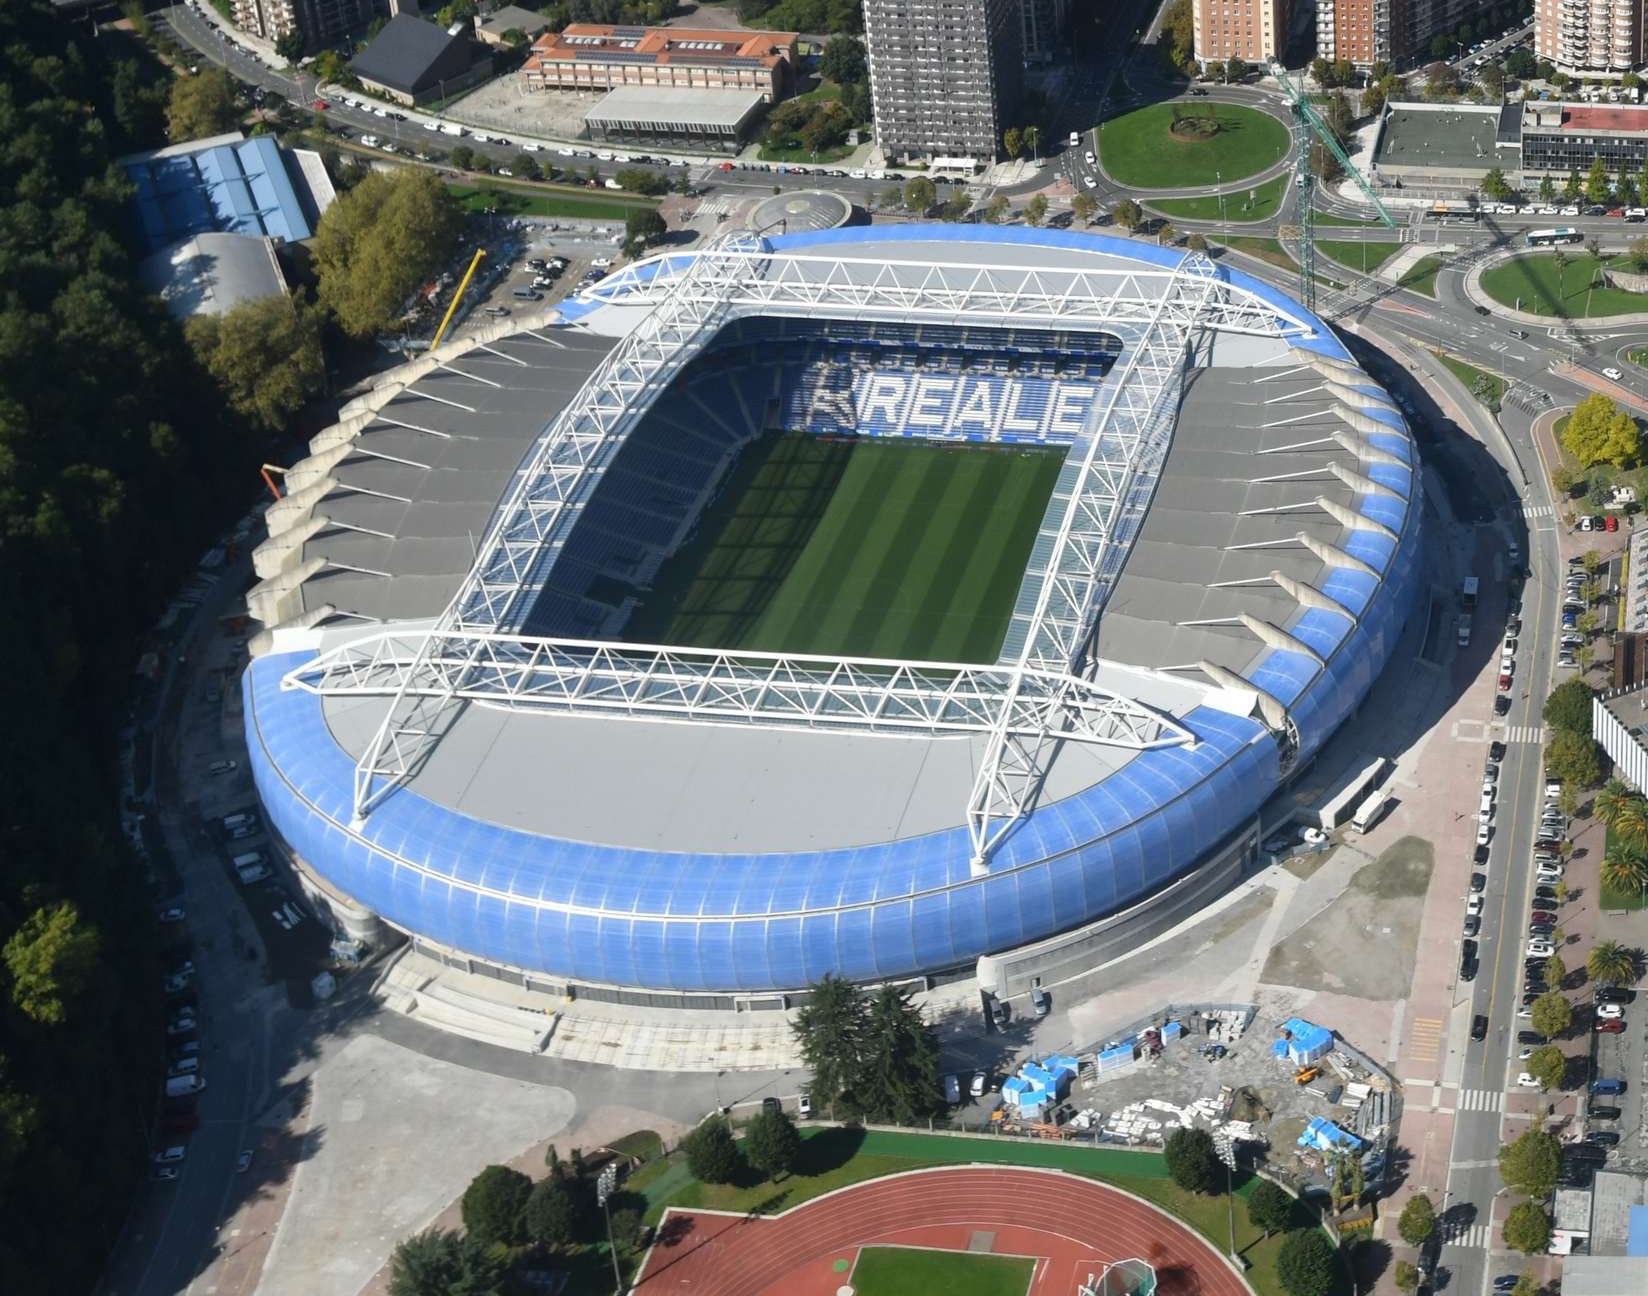 Real Sociedad Stadium - Live Football: Estadio Anoeta - Stadium Real Sociedad / Real sociedad ...